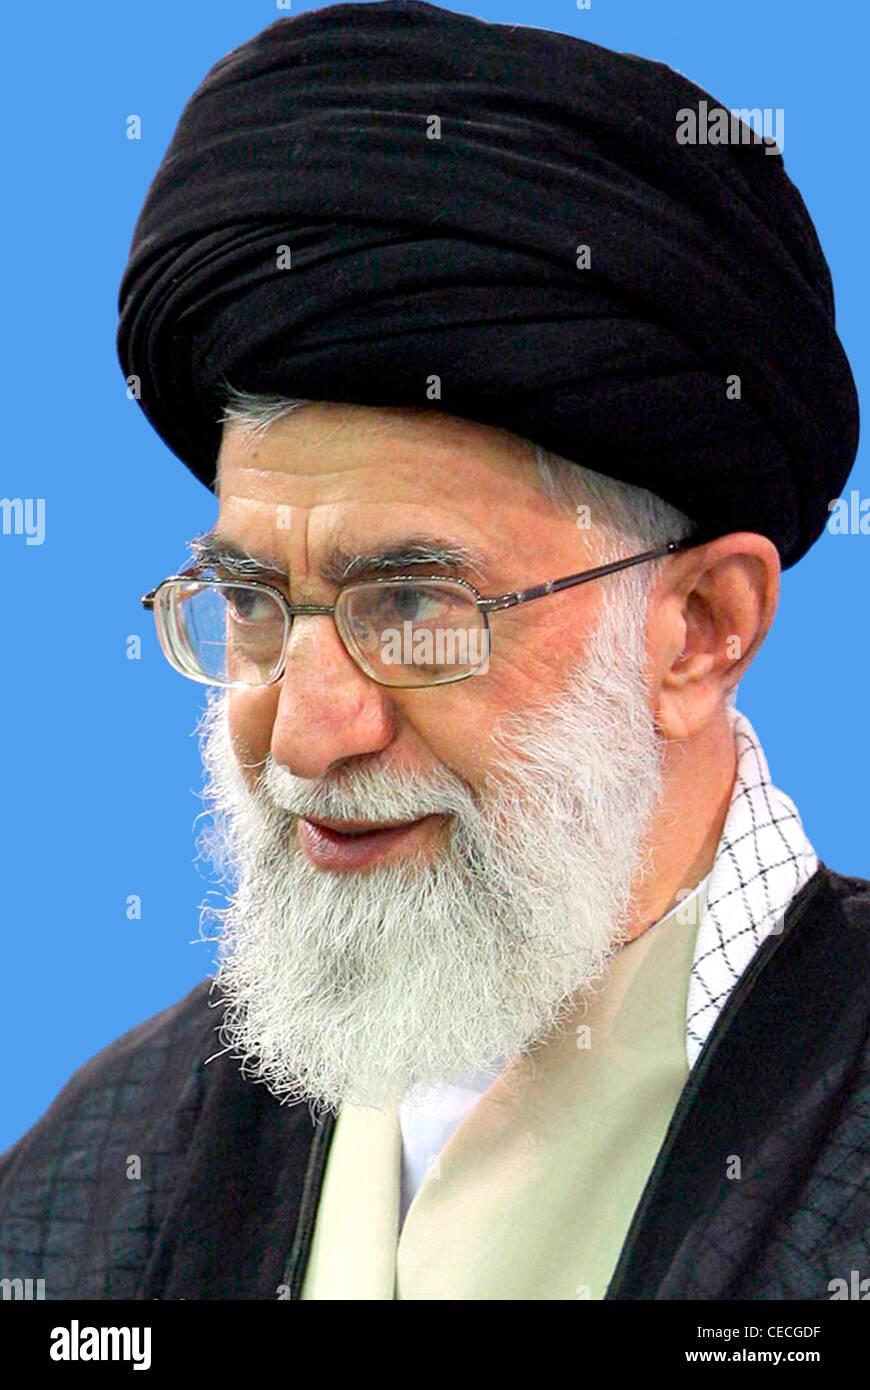 Iran releases photo of Khamenei with Hezbollah's Nasrallah | Al Arabiya  English